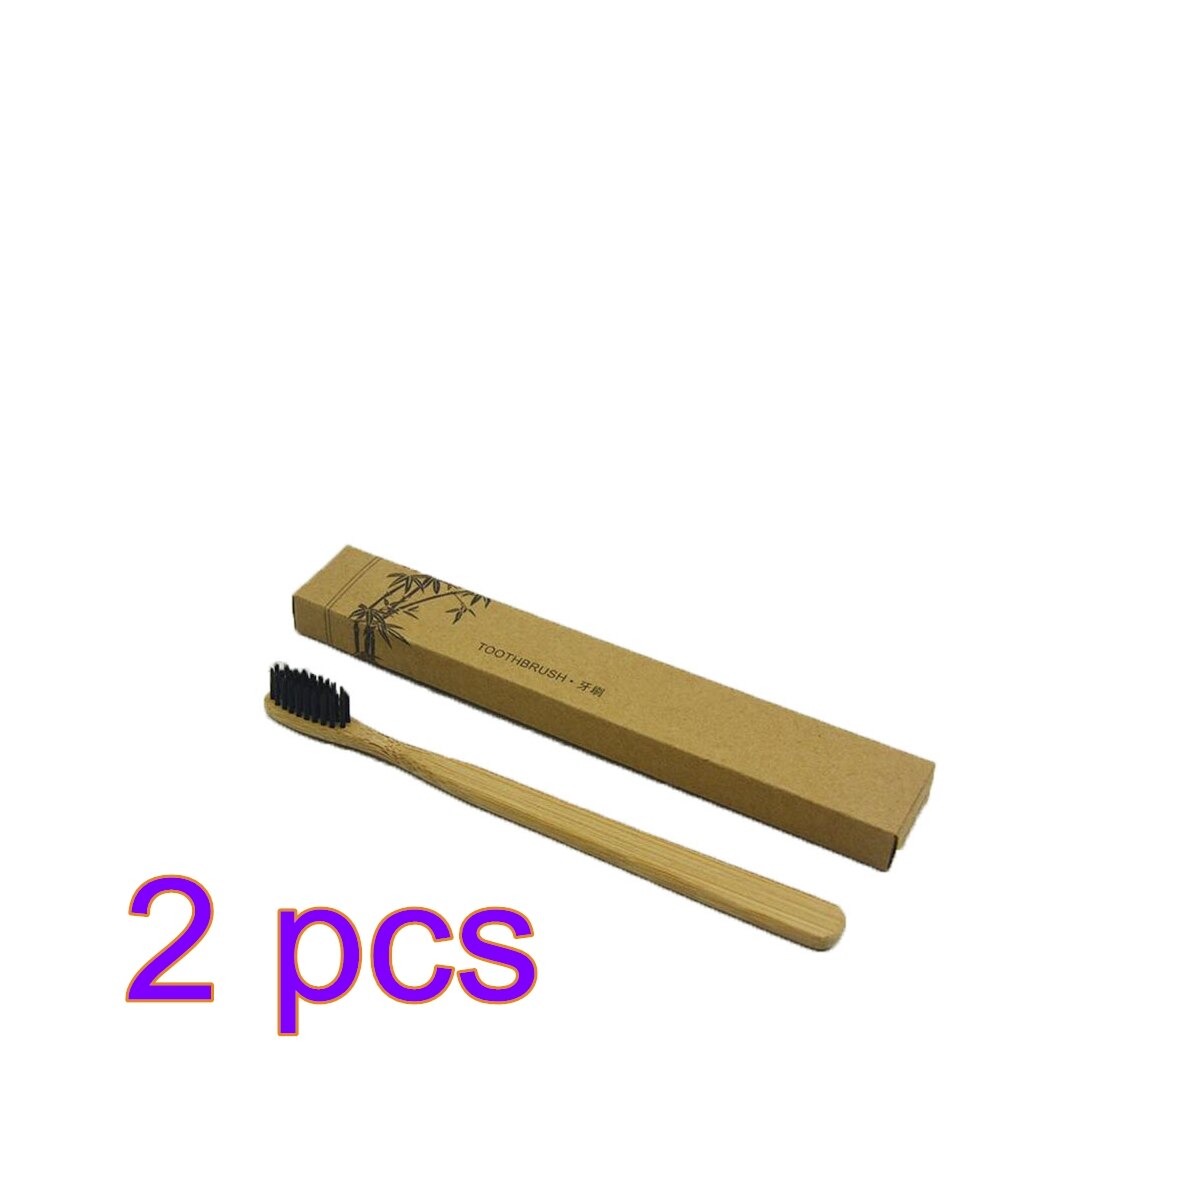 1pc/2 stk voksen / barn miljøvenligt træ tandbørste bambus tandbørste blød bambus fiber træhåndtag tandbørste